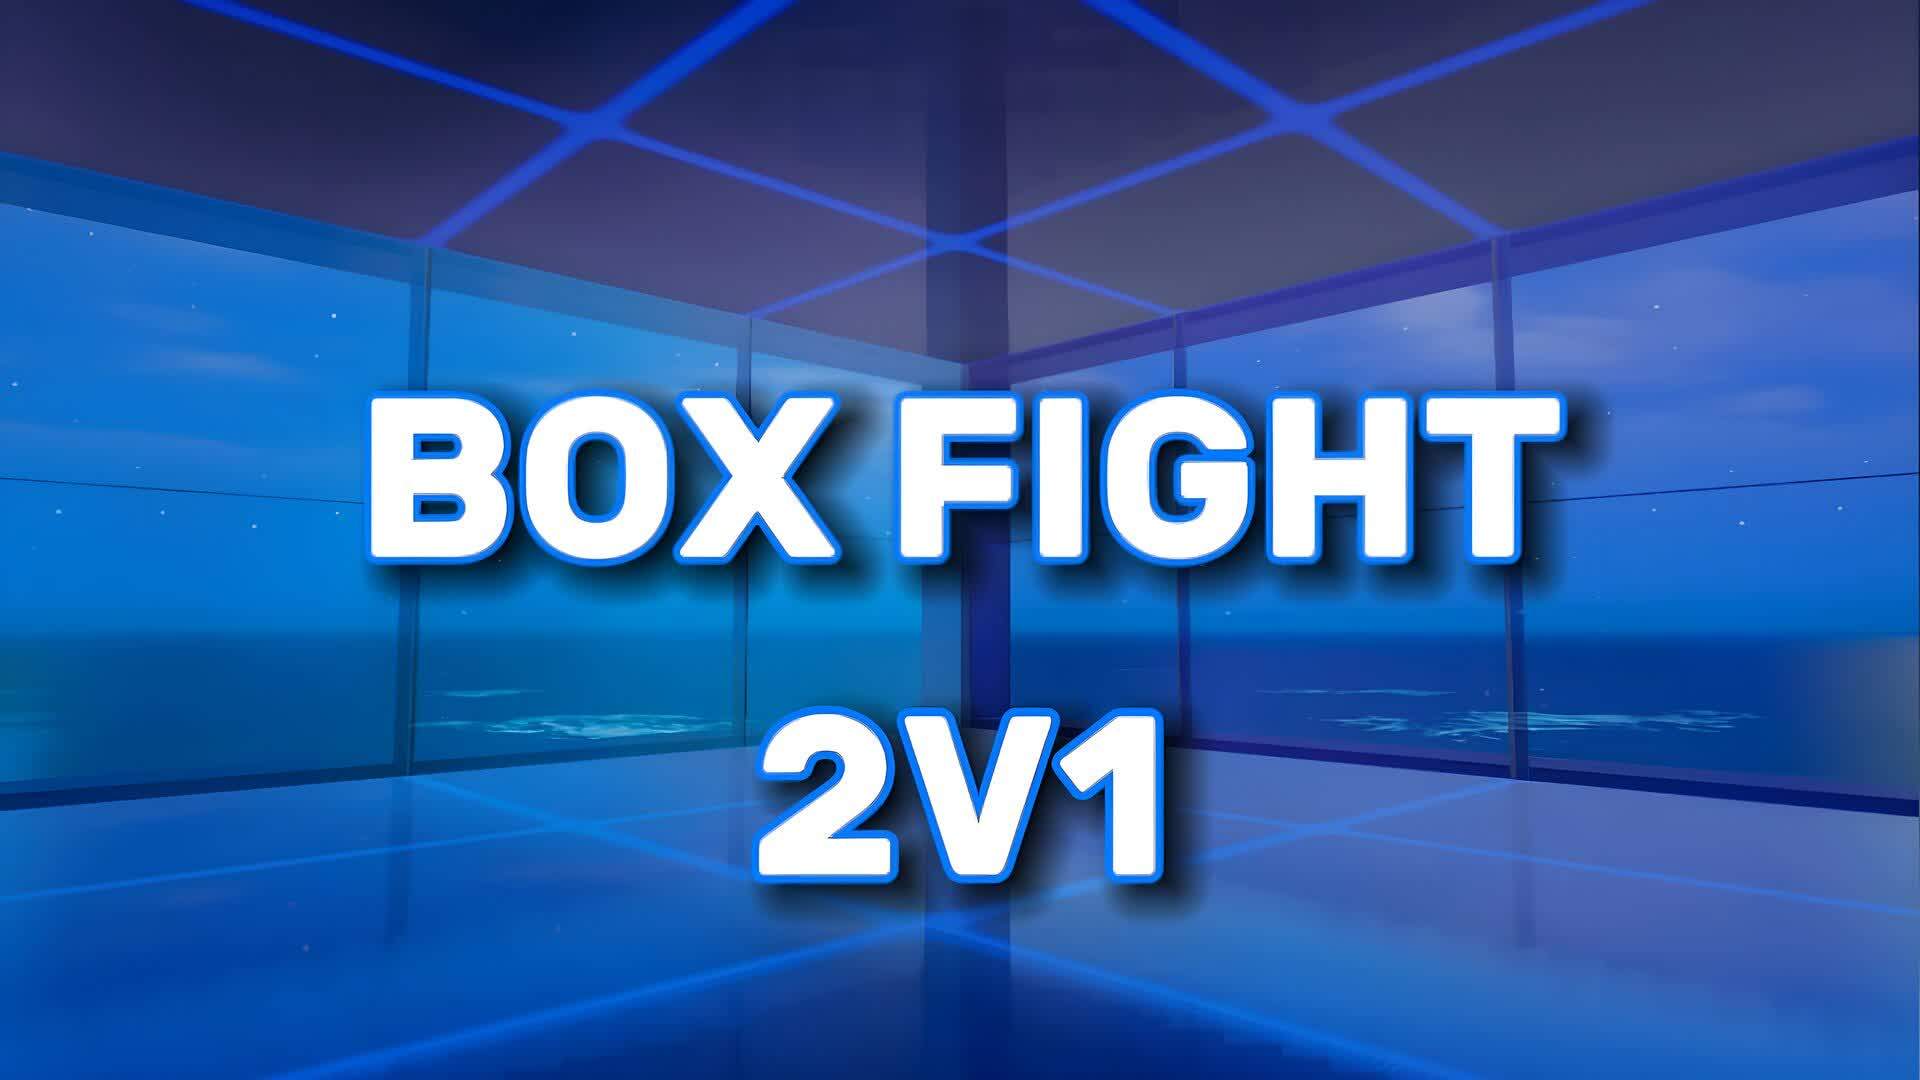 BOX FIGHT 2V1